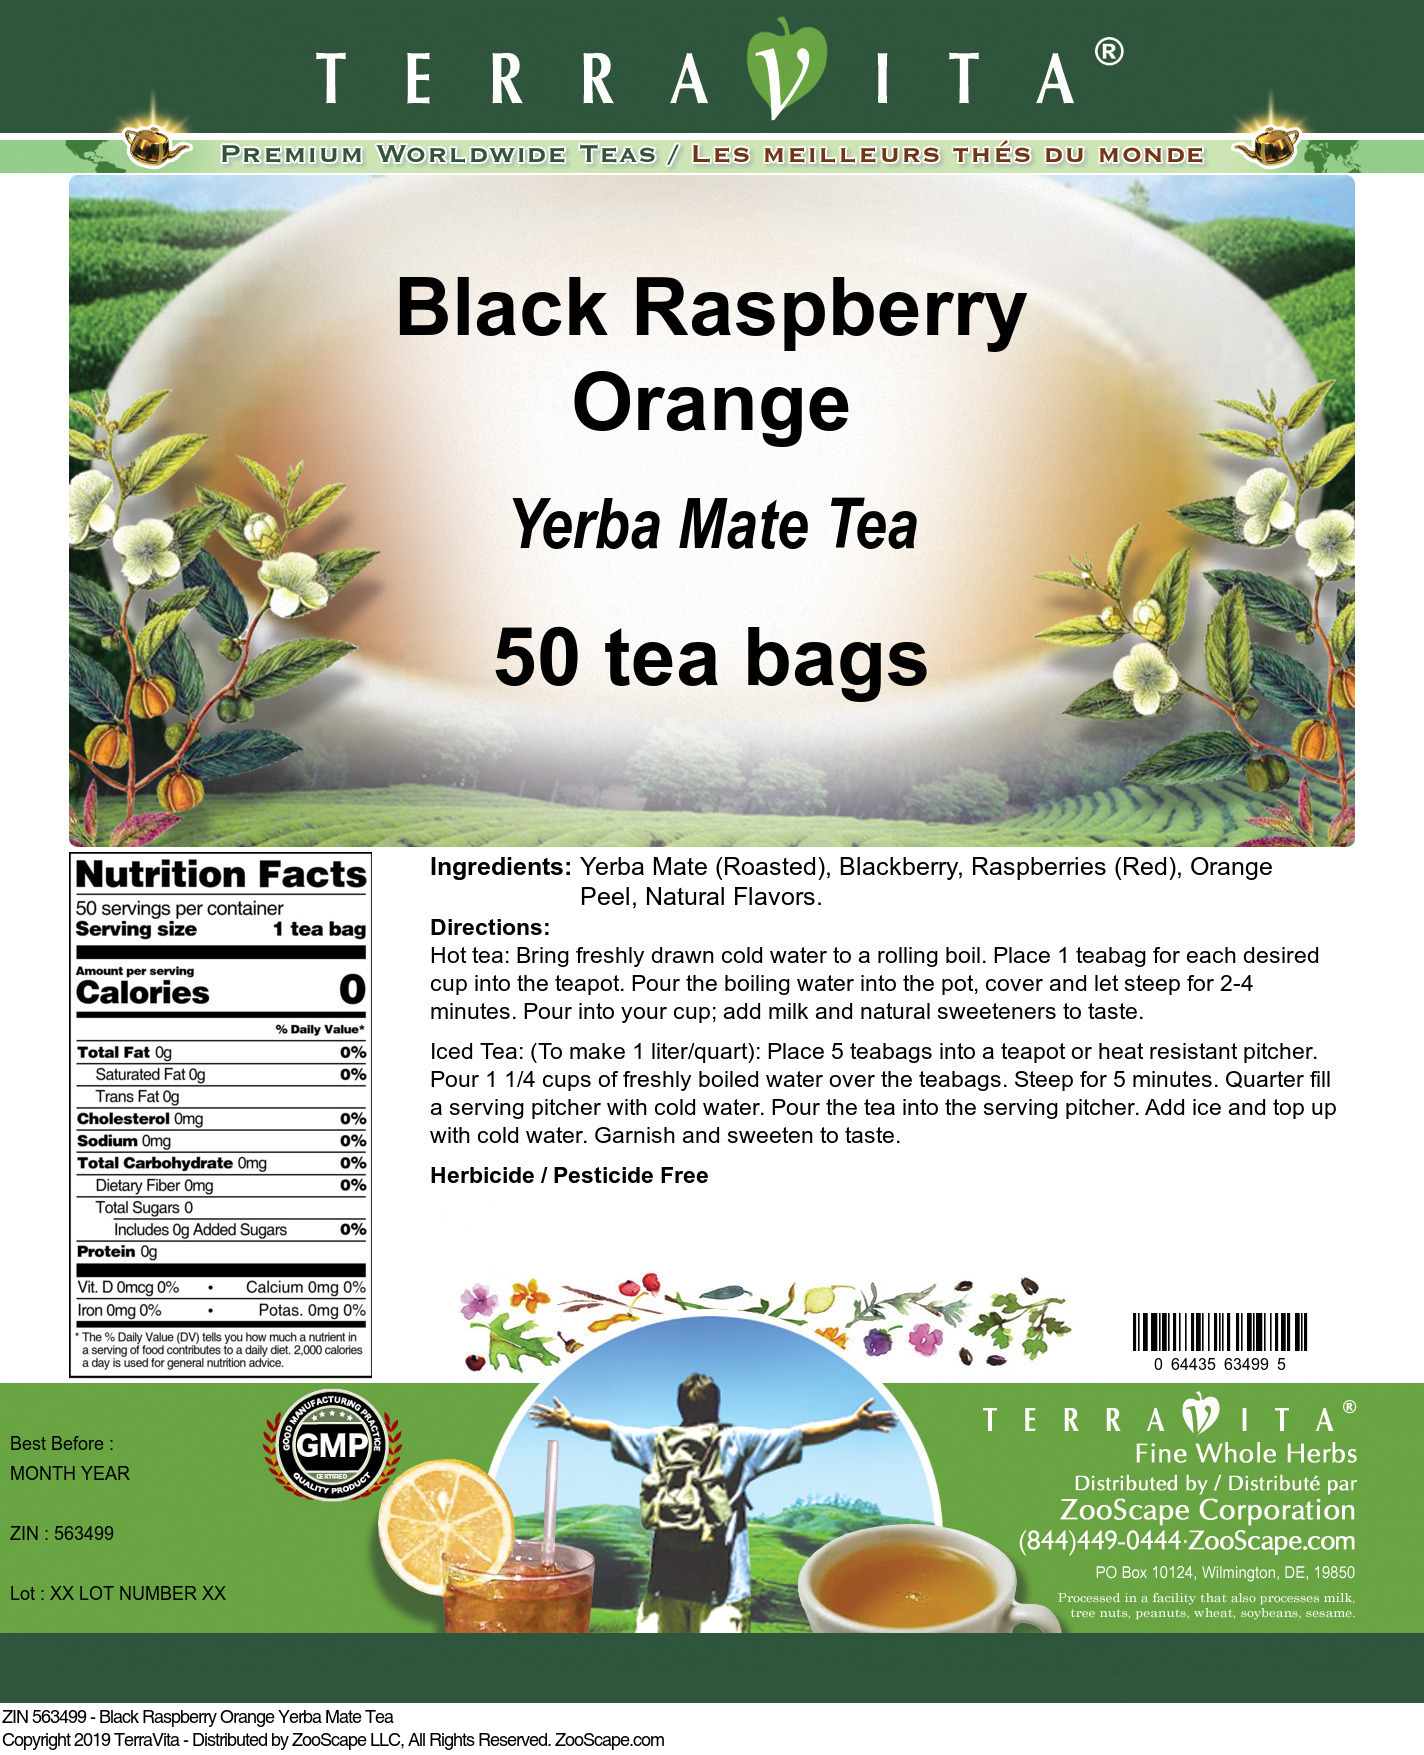 Black Raspberry Orange Yerba Mate Tea - Label